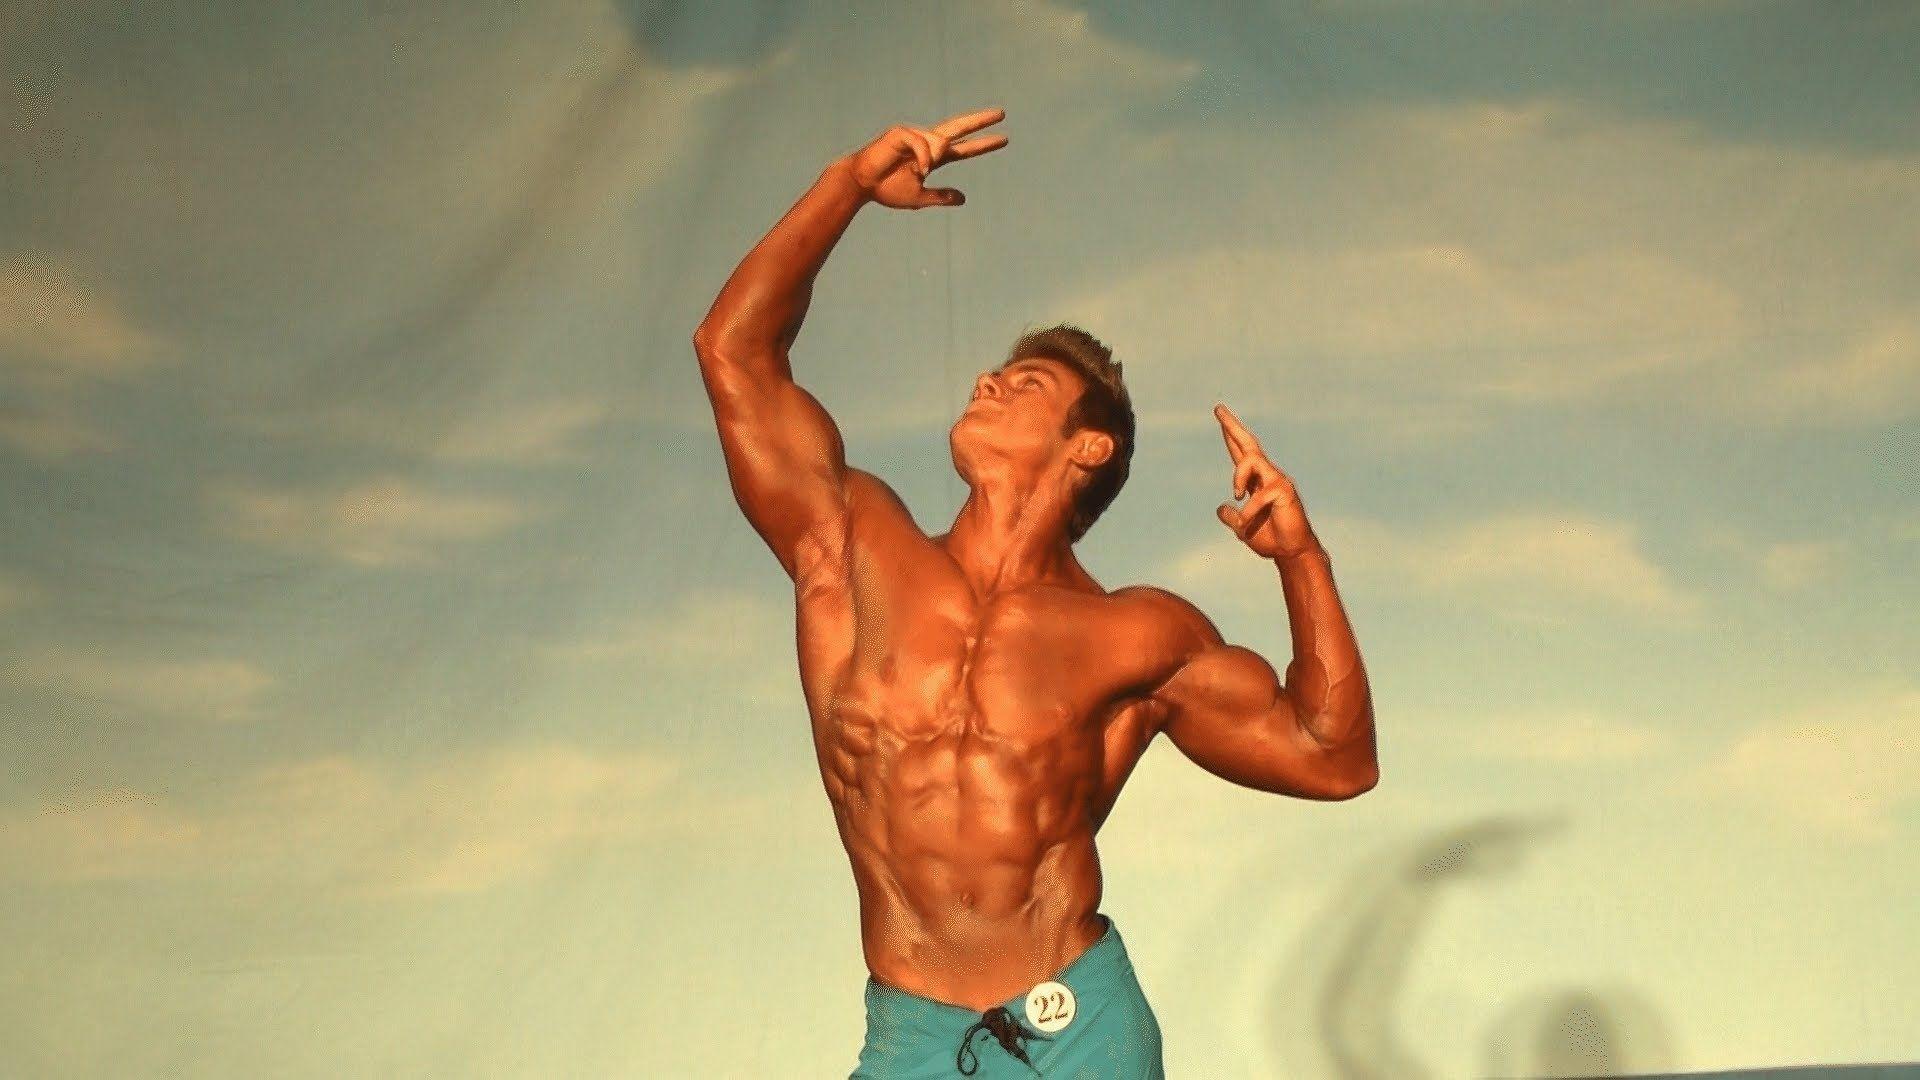 Jeff Seid, Bodybuilding, Man, Bodybuilding Poses Pics